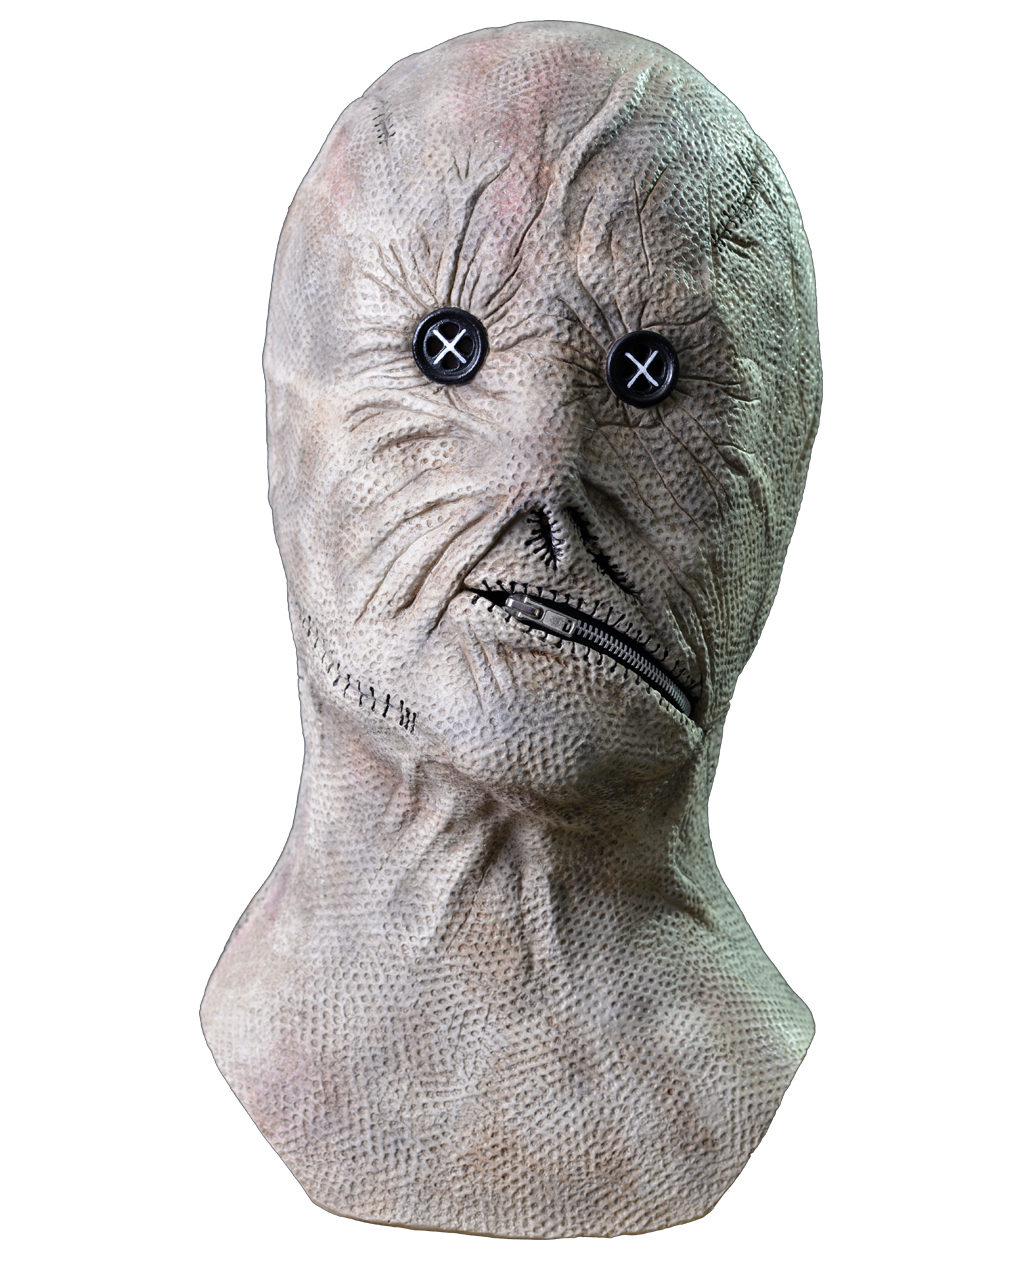 Nightbreed Dr. Decker Maske  Cabal Maske von Clive Barker von Horror-Shop.com